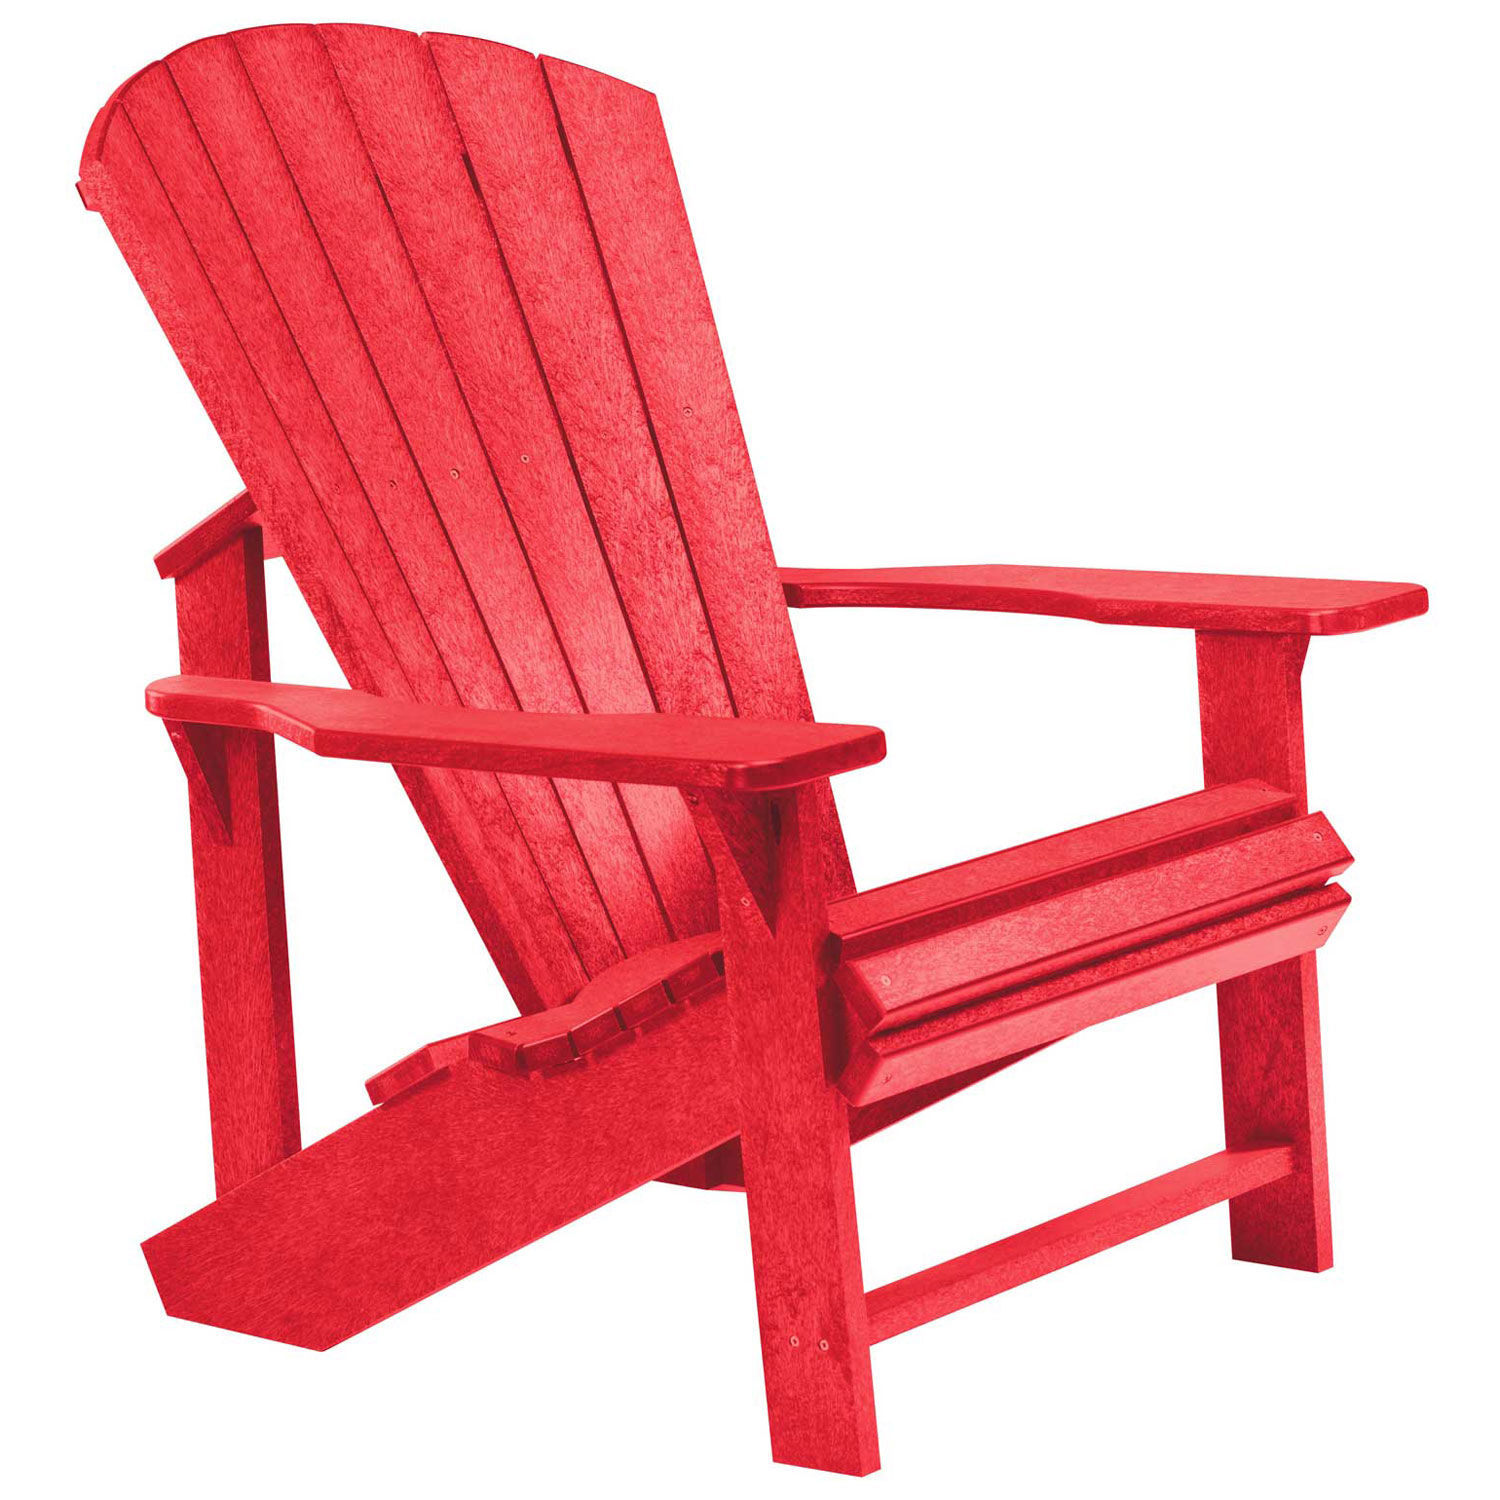 Recycled Plastic Adirondack Chair, Red, 32"L x 31"W x 40-1/2"H | eBay